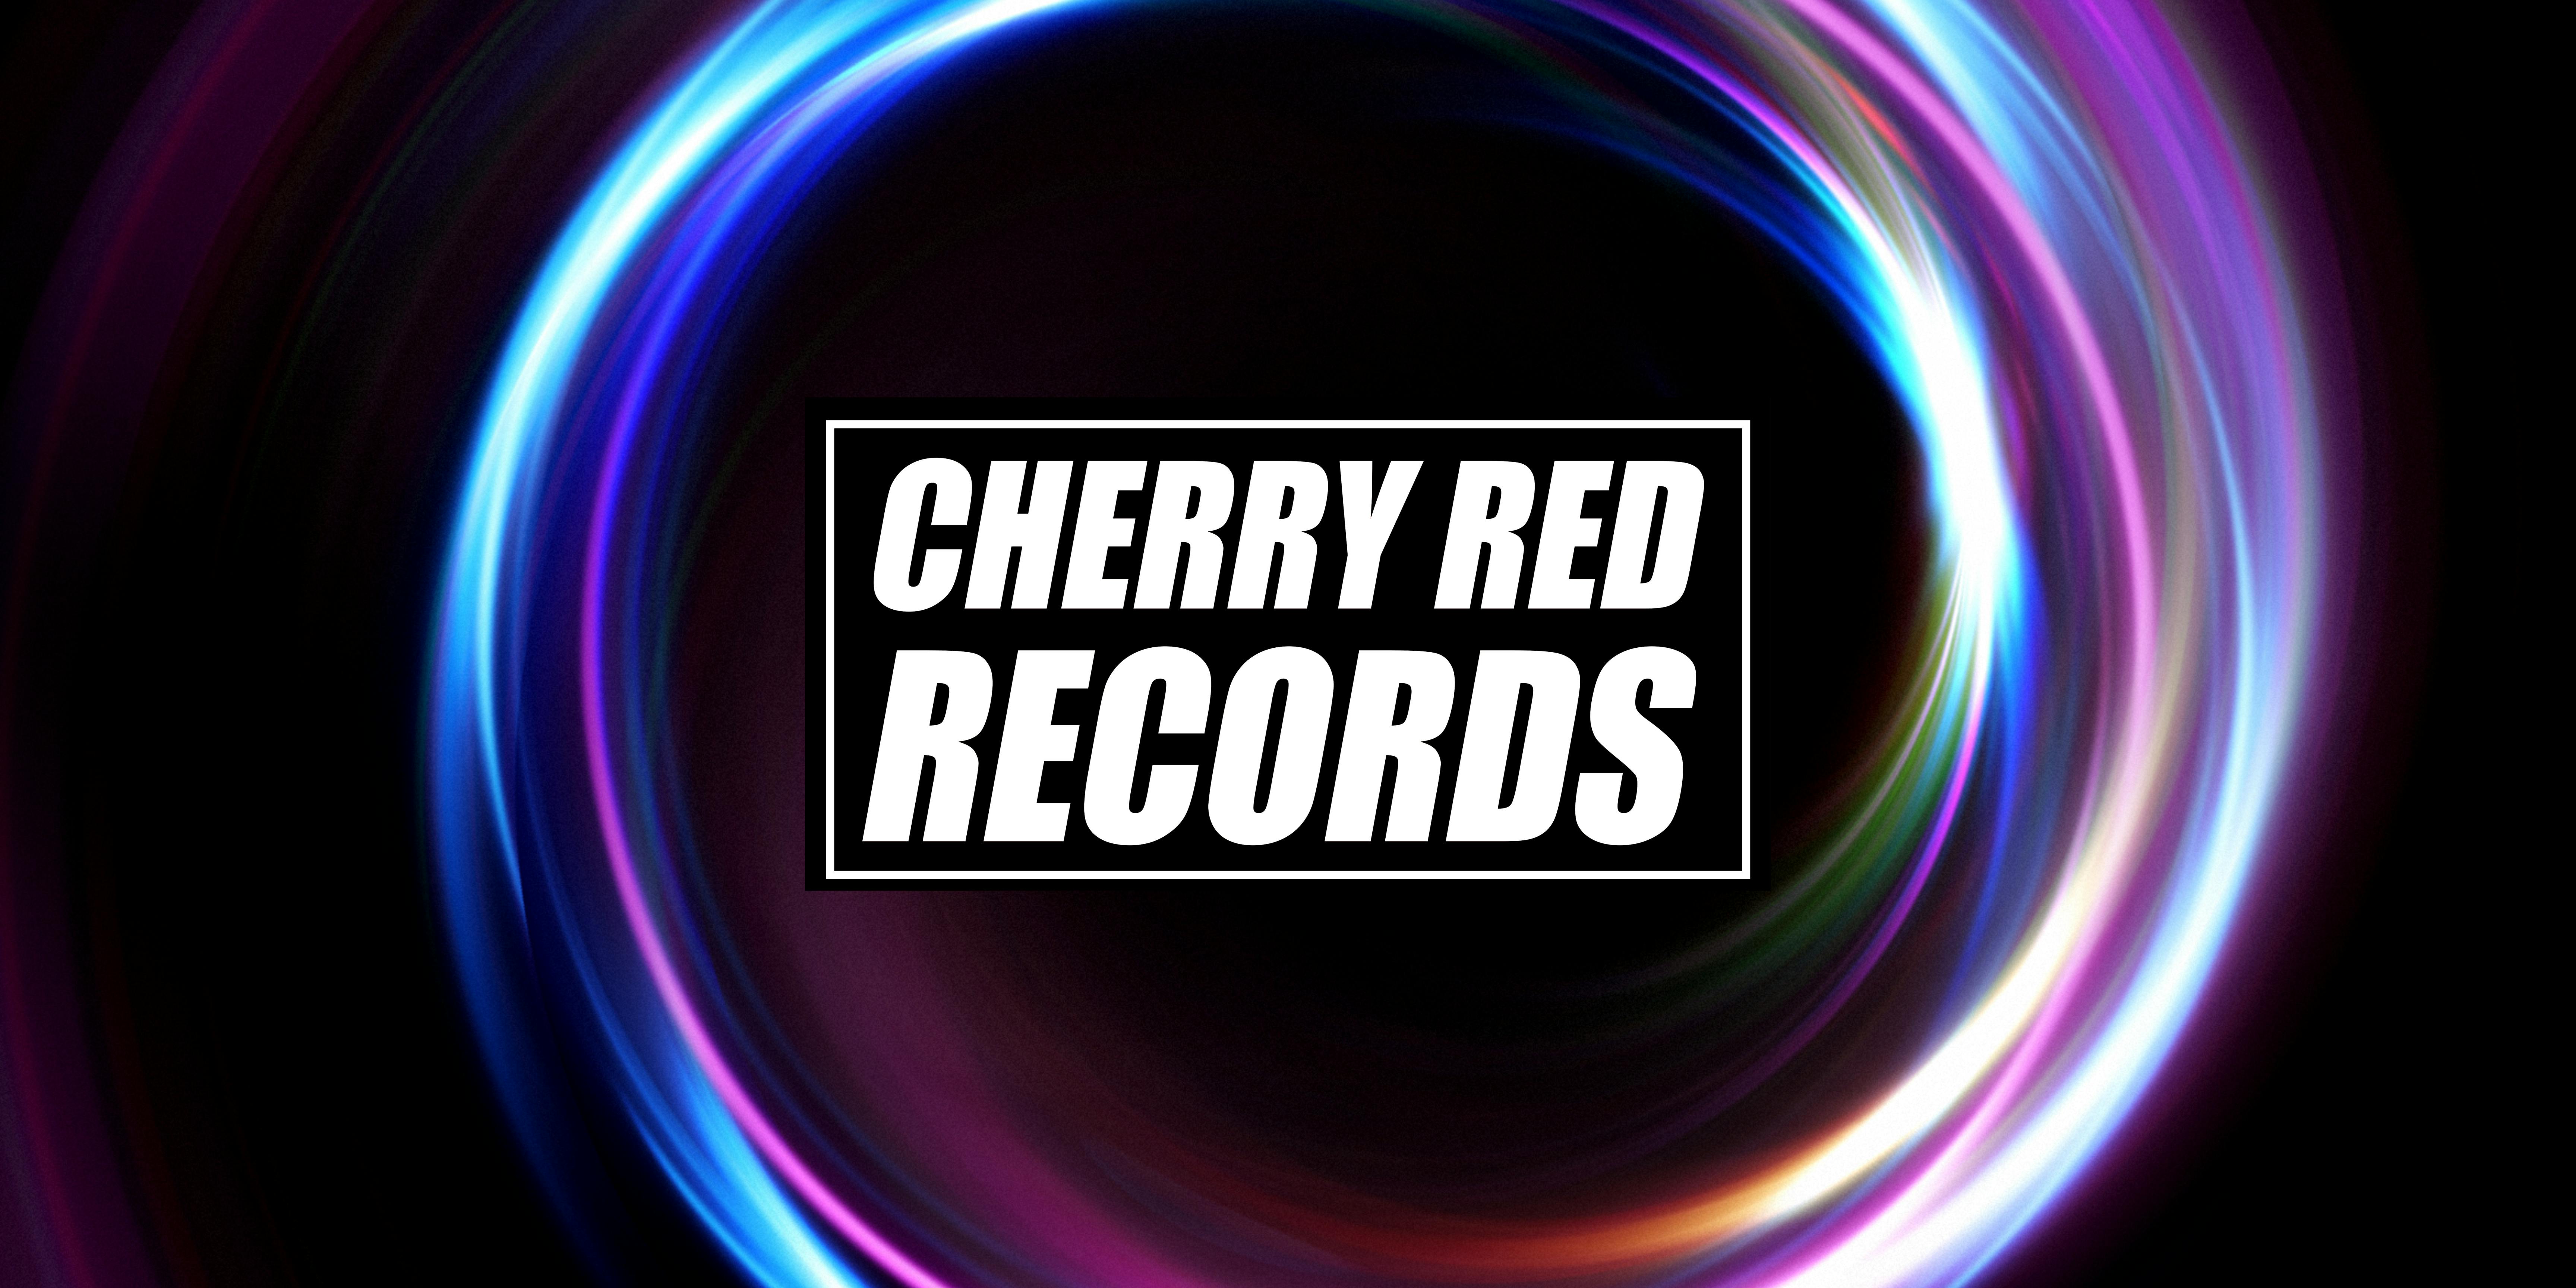 Our 3D audio Beta Program: Cherry Red Records testimony